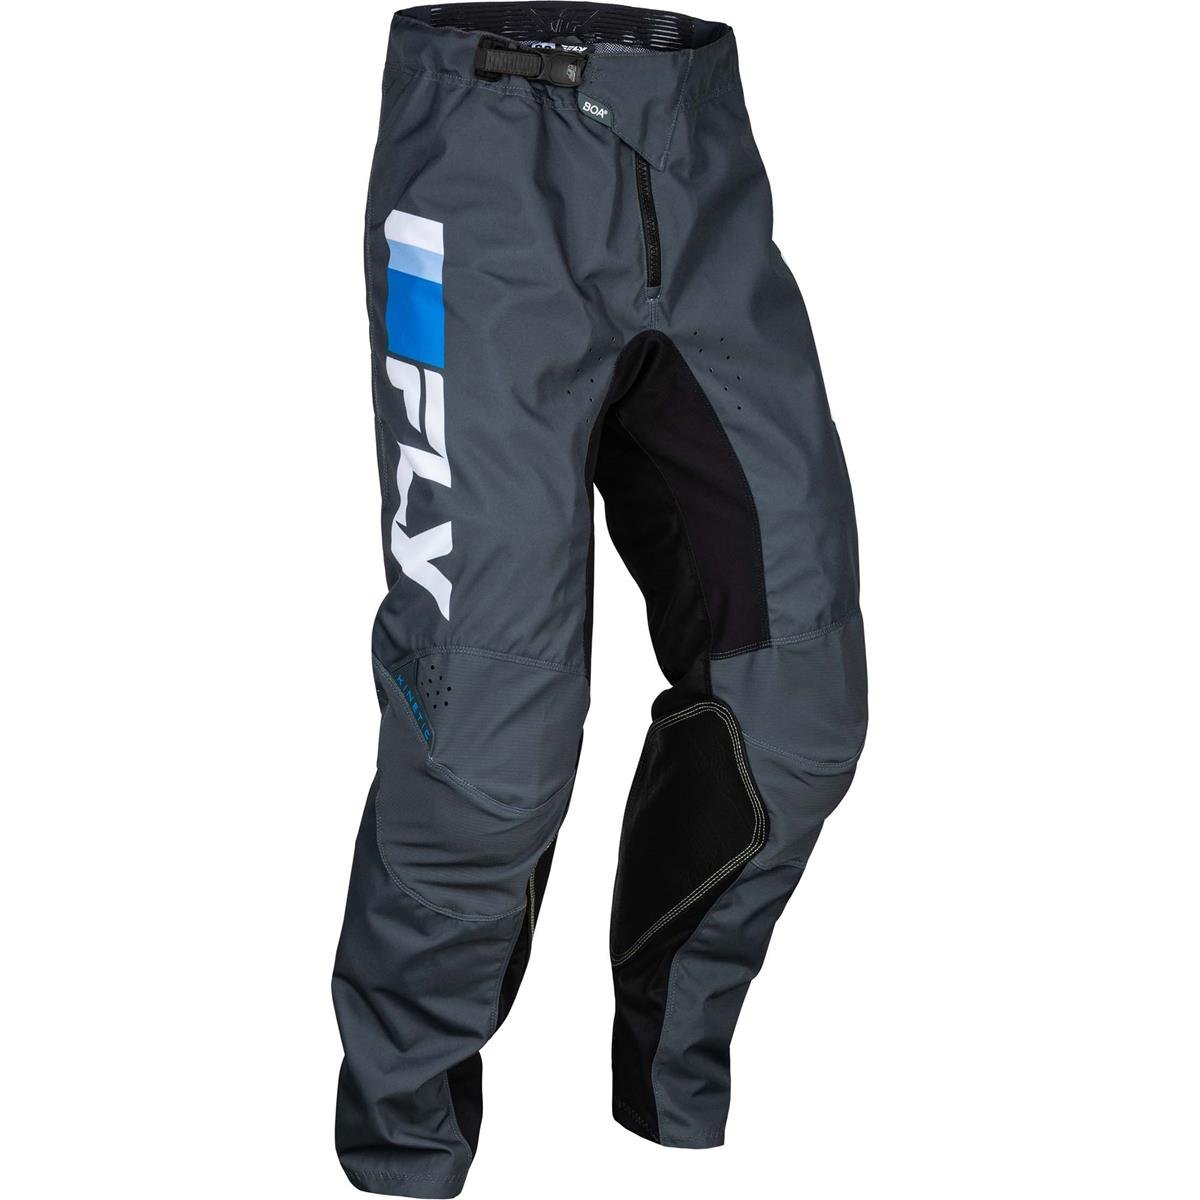 Fly Racing Pantalon MX Kinetic BOA Prix - Bleu/Charcoal/Blanc